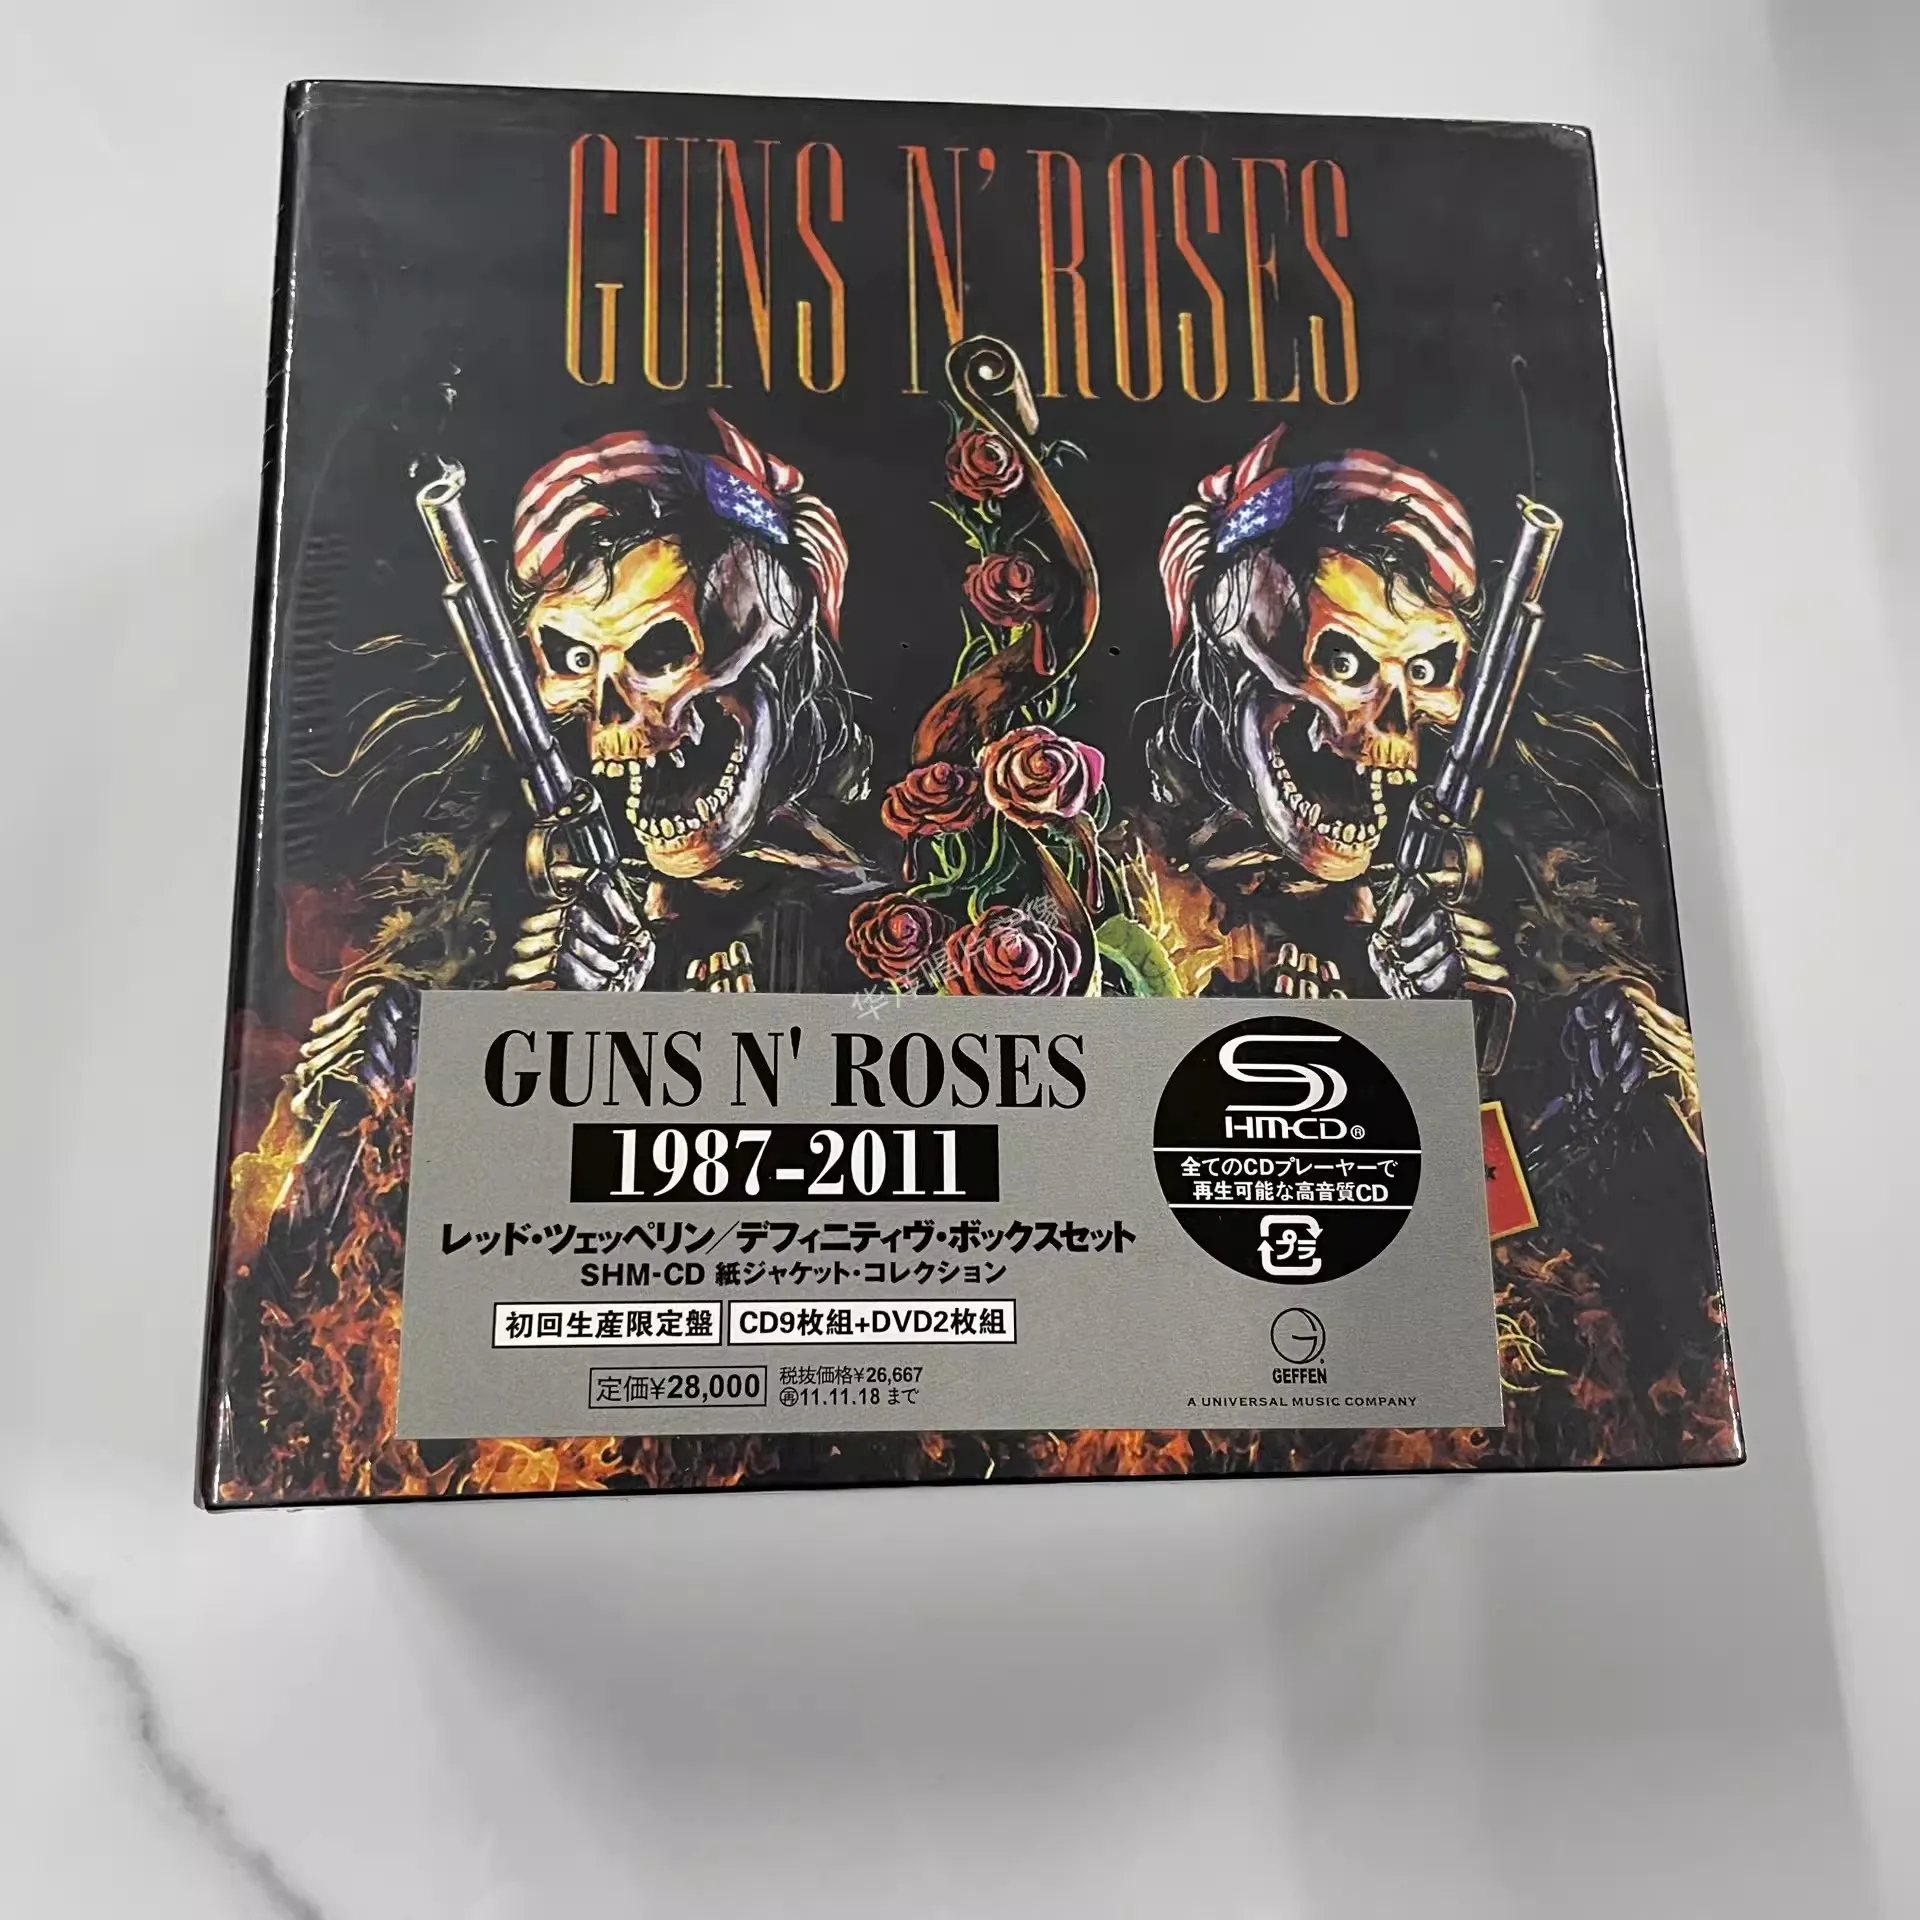 

Hard Rock Guns N Roses Music CD Greatest Hits 1987-2011 Album 9pcs Music Record +2pcs DVD Cosplay Car Soundtracks Box Collection